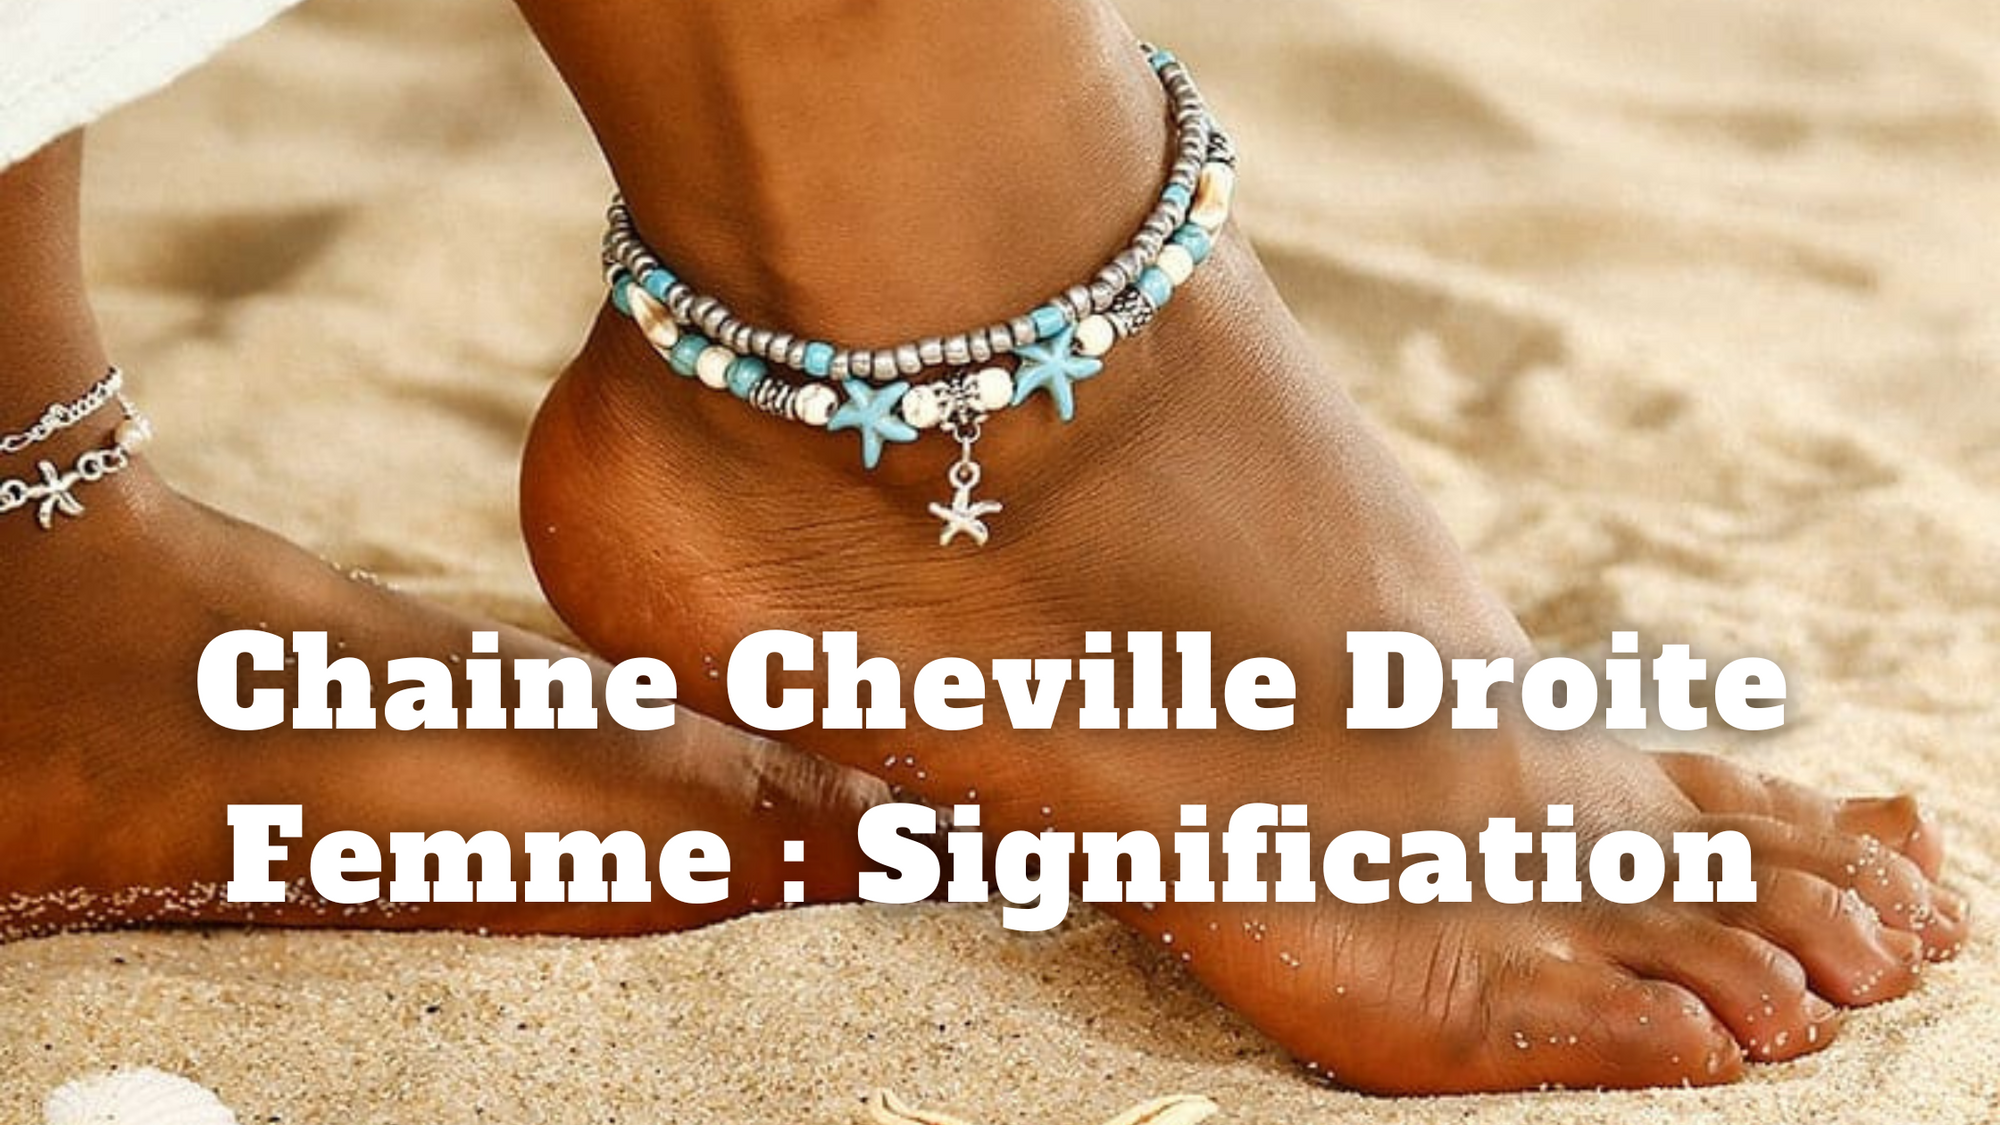 Signification Chaine Cheville Droite Femme